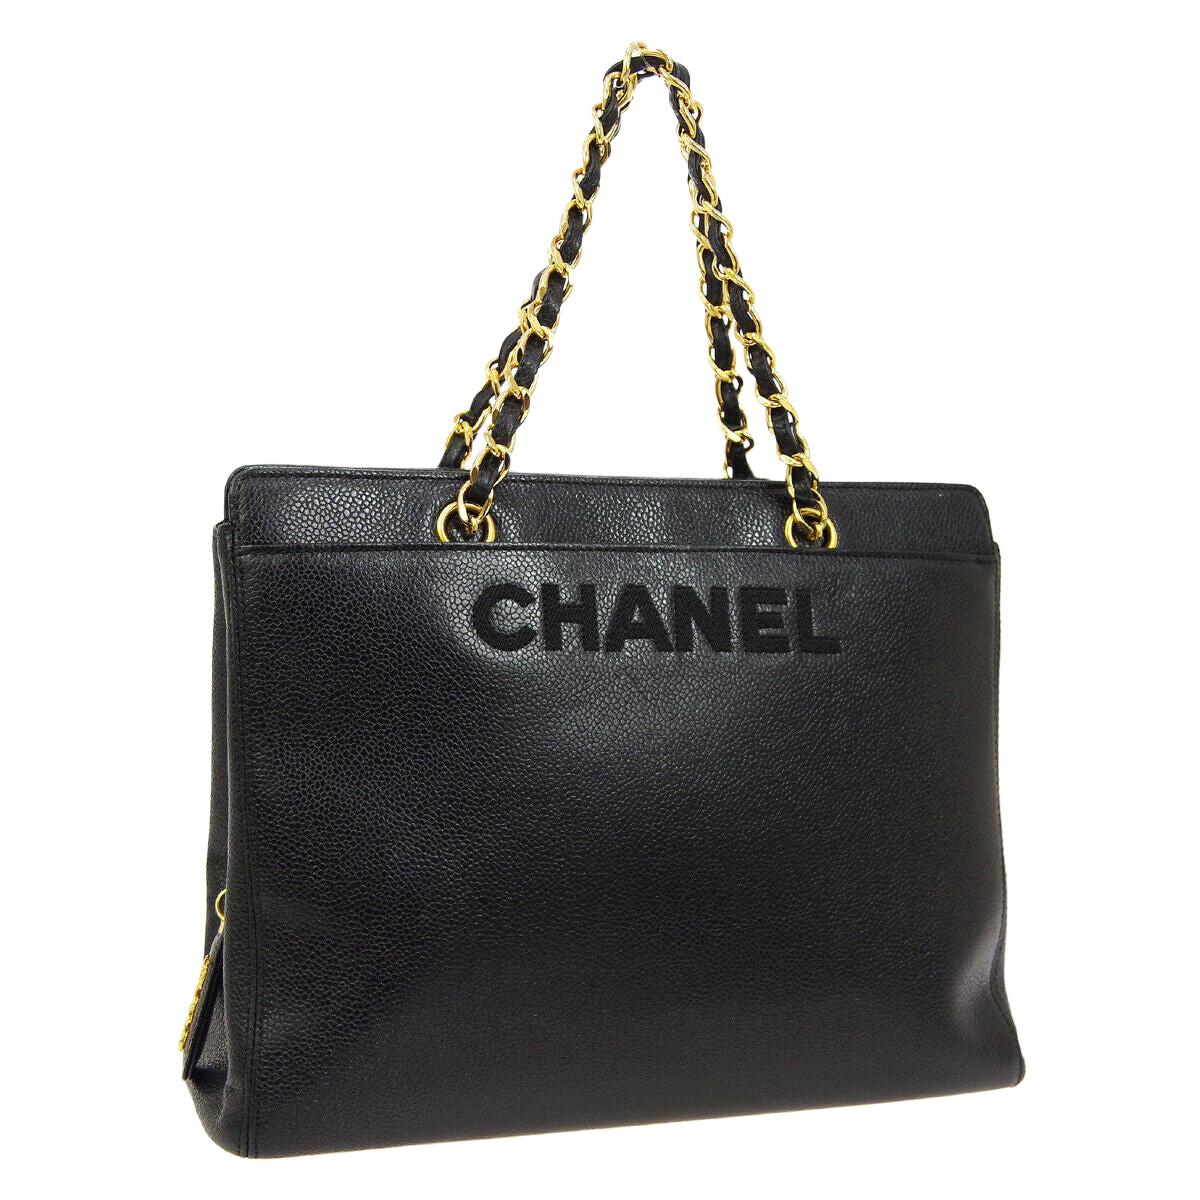 Chanel Black Leather Gold Large 'CHANEL' Travel Carryall Shoulder Bag in Box 